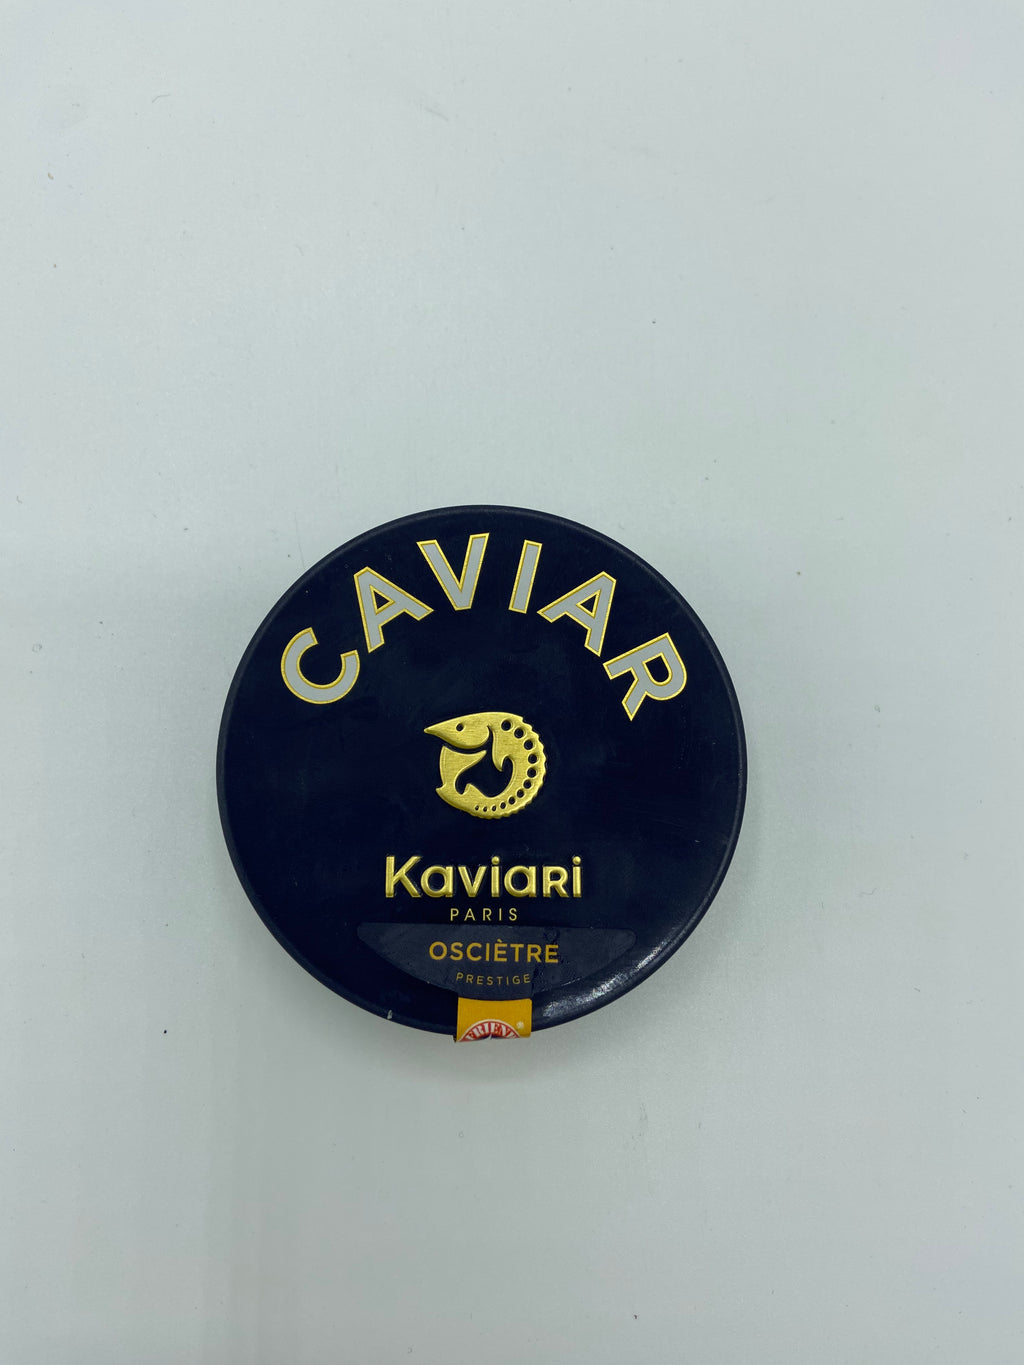 Caviar Oscietra Prestige BTE 50g - Kaviari 